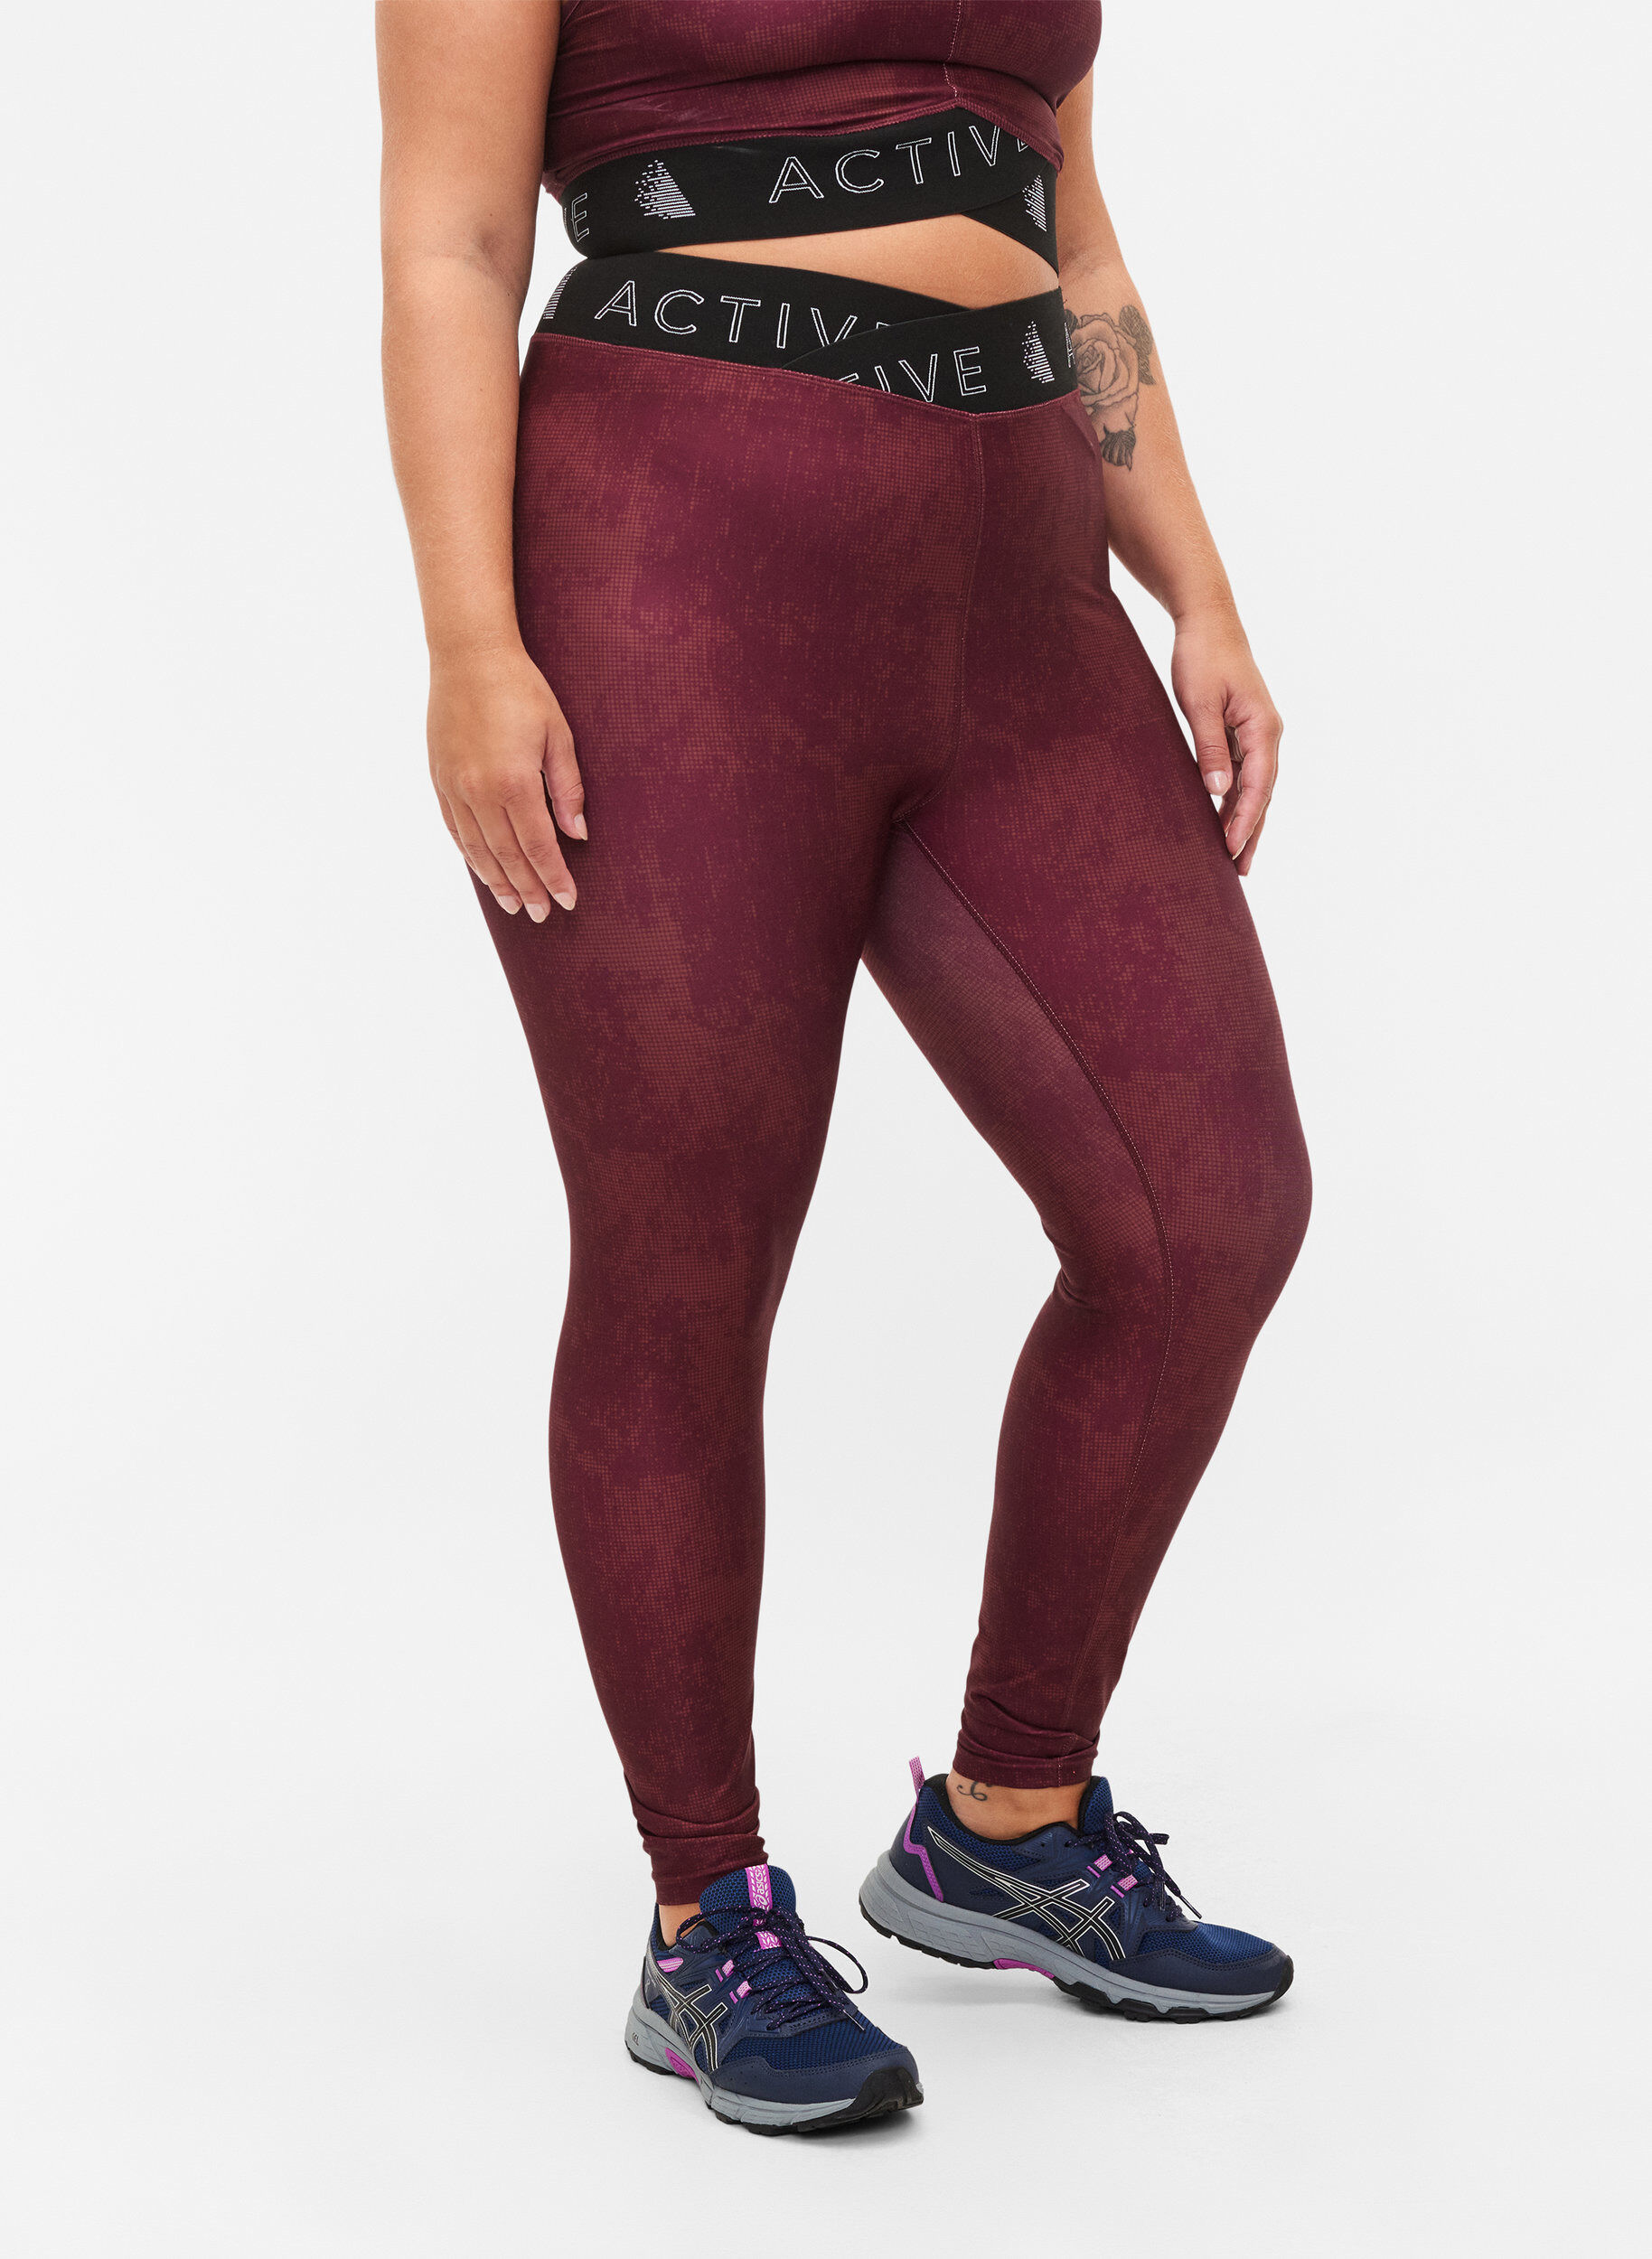 Leggings Depot Women's Printed Solid Activewear Jogger Track Cuff  Sweatpants | eBay